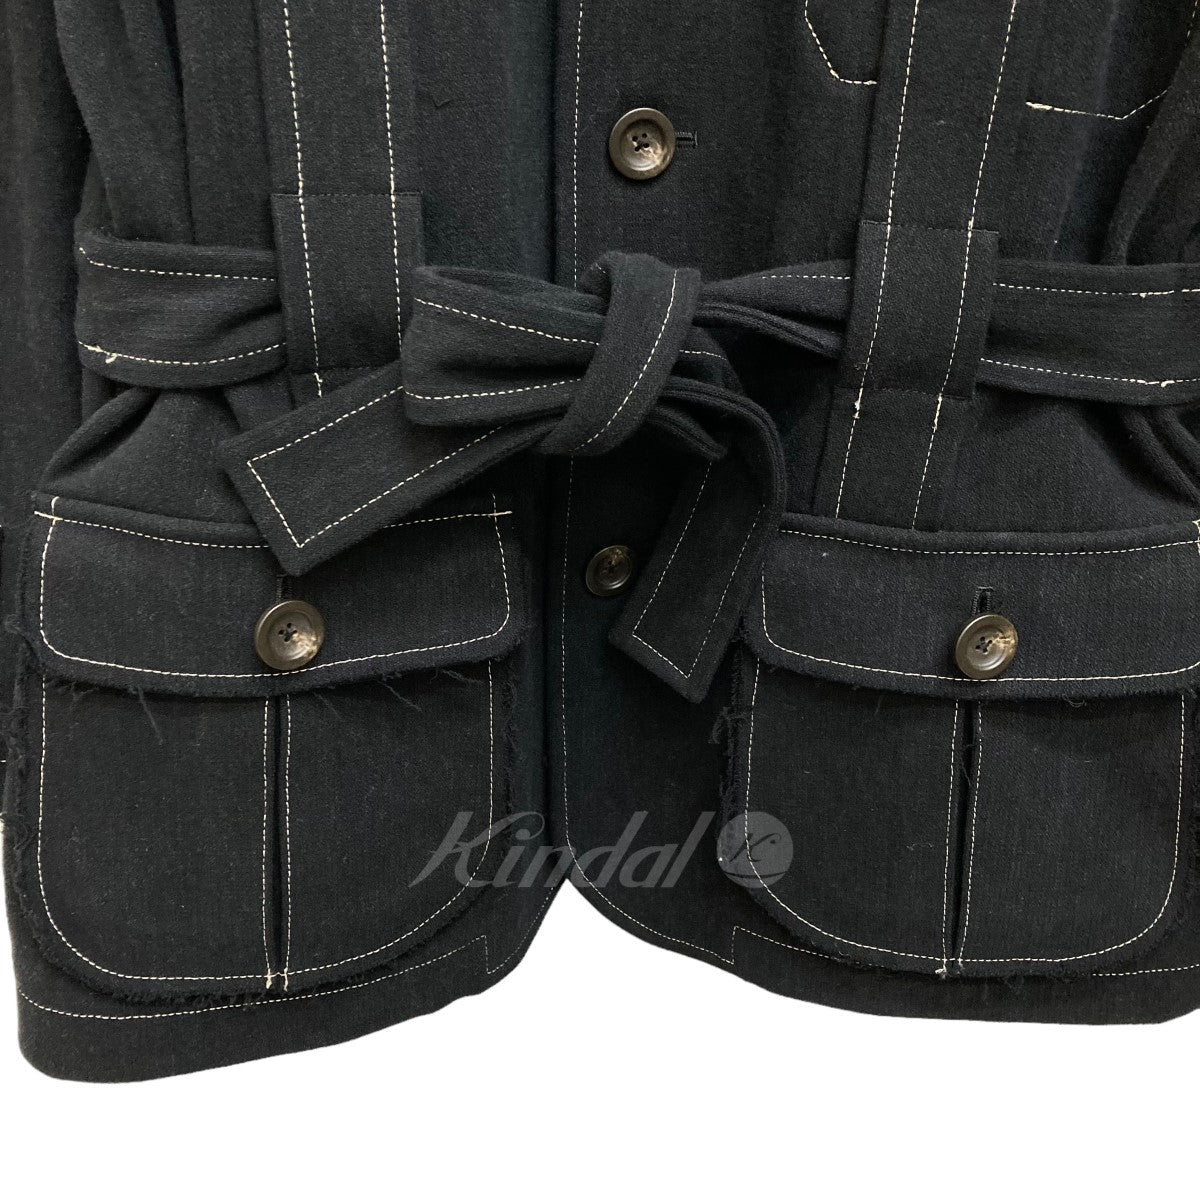 KHOKI(コッキ) 21AW Replica norfolk jacket coat コート